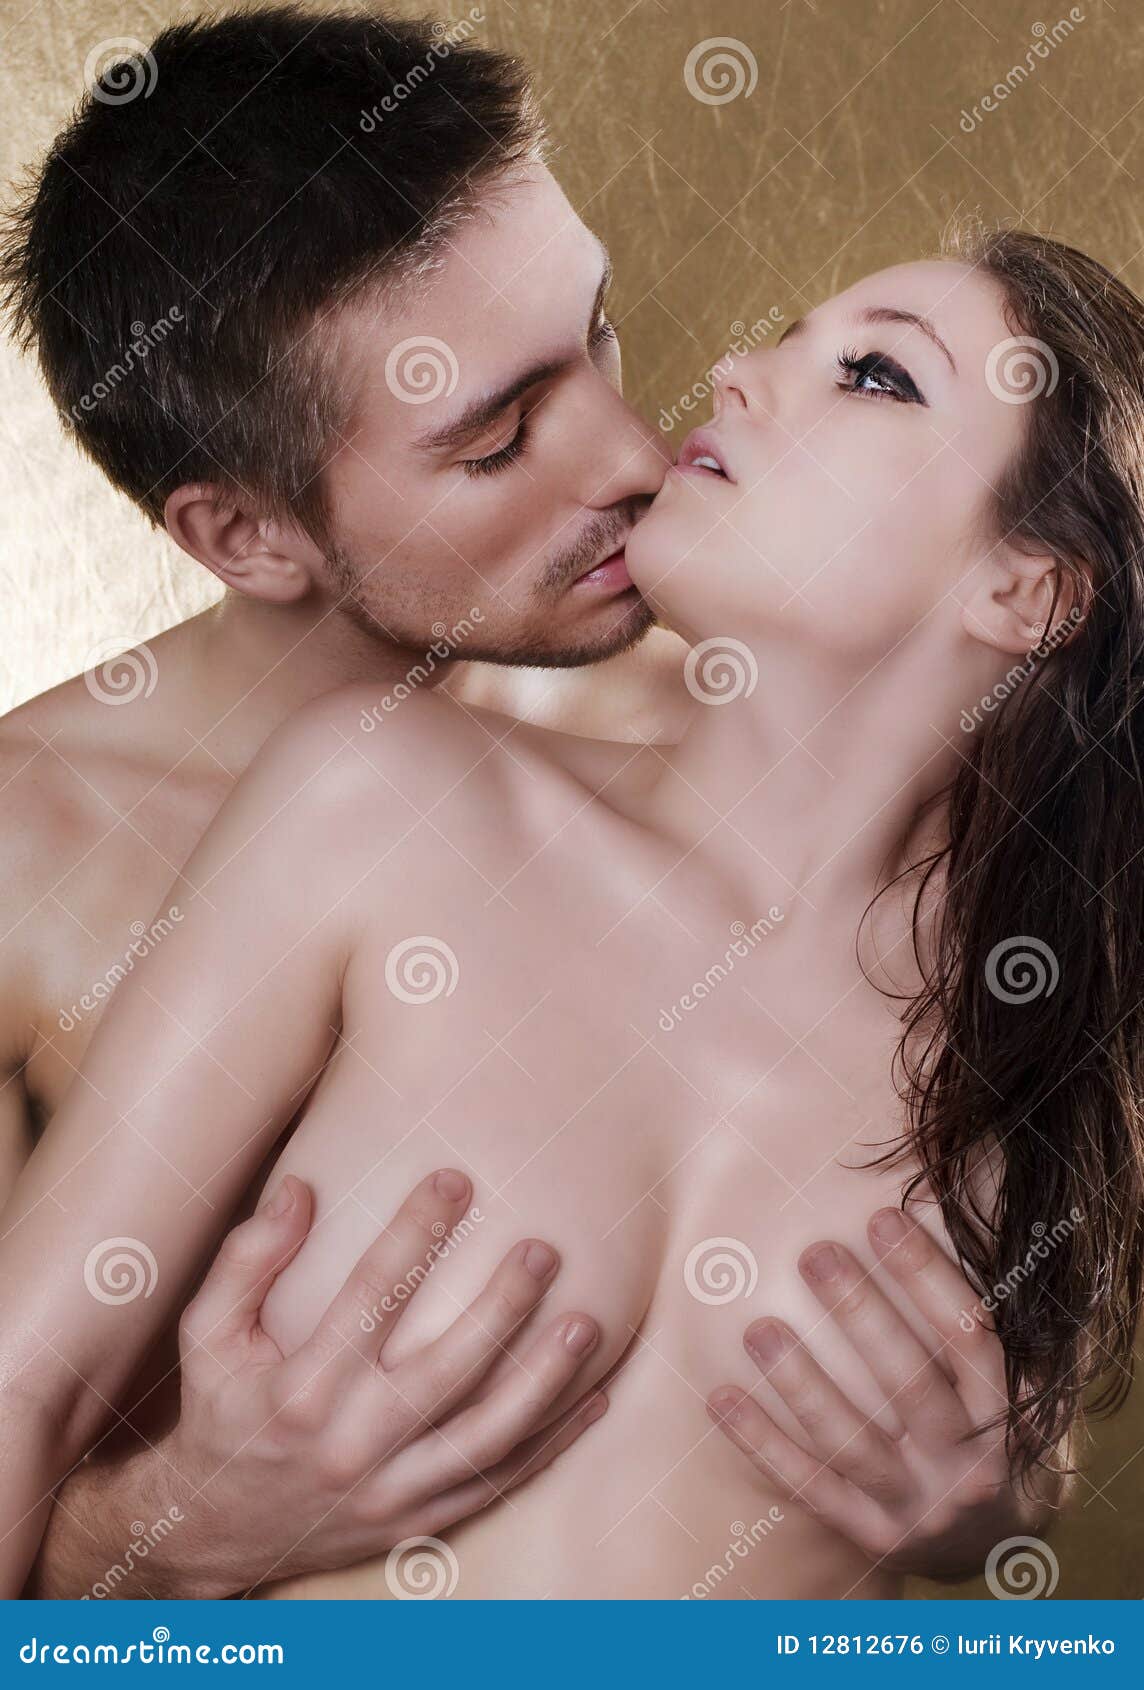 Kissing while naked